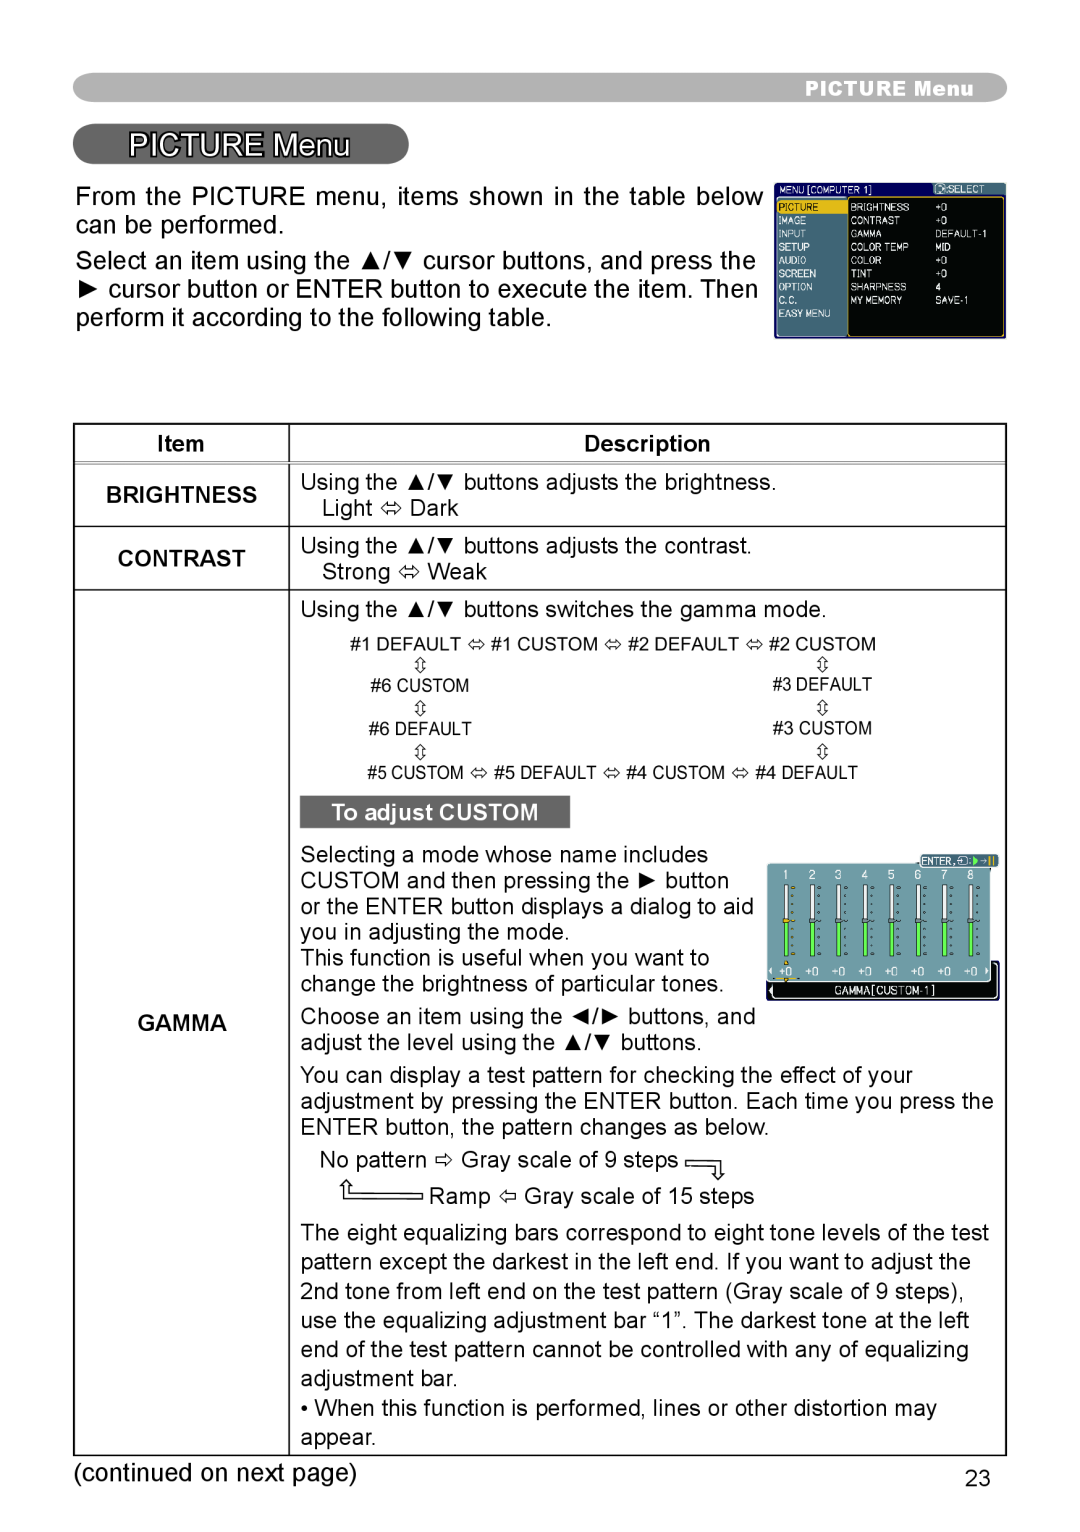 Dukane 8783 user manual PICTURE Menu, Description, Brightness, Contrast, To adjust CUSTOM, Gamma 